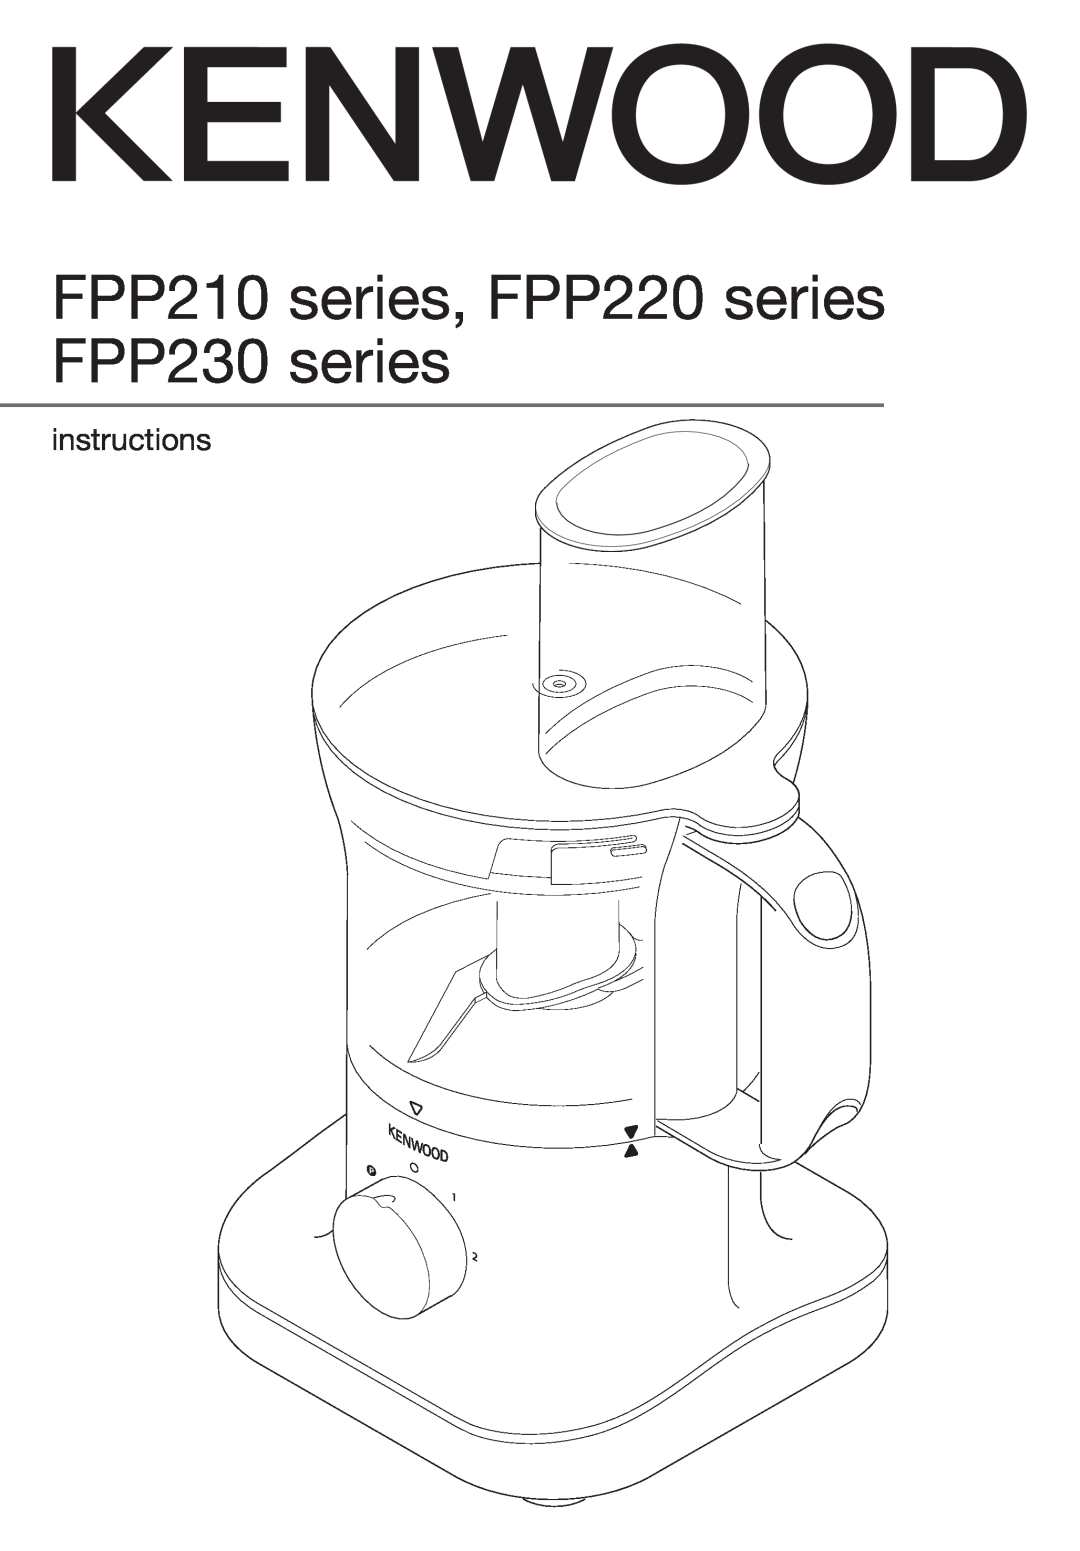 Kenwood manual FPP210 series, FPP220 series FPP230 series, instructions 